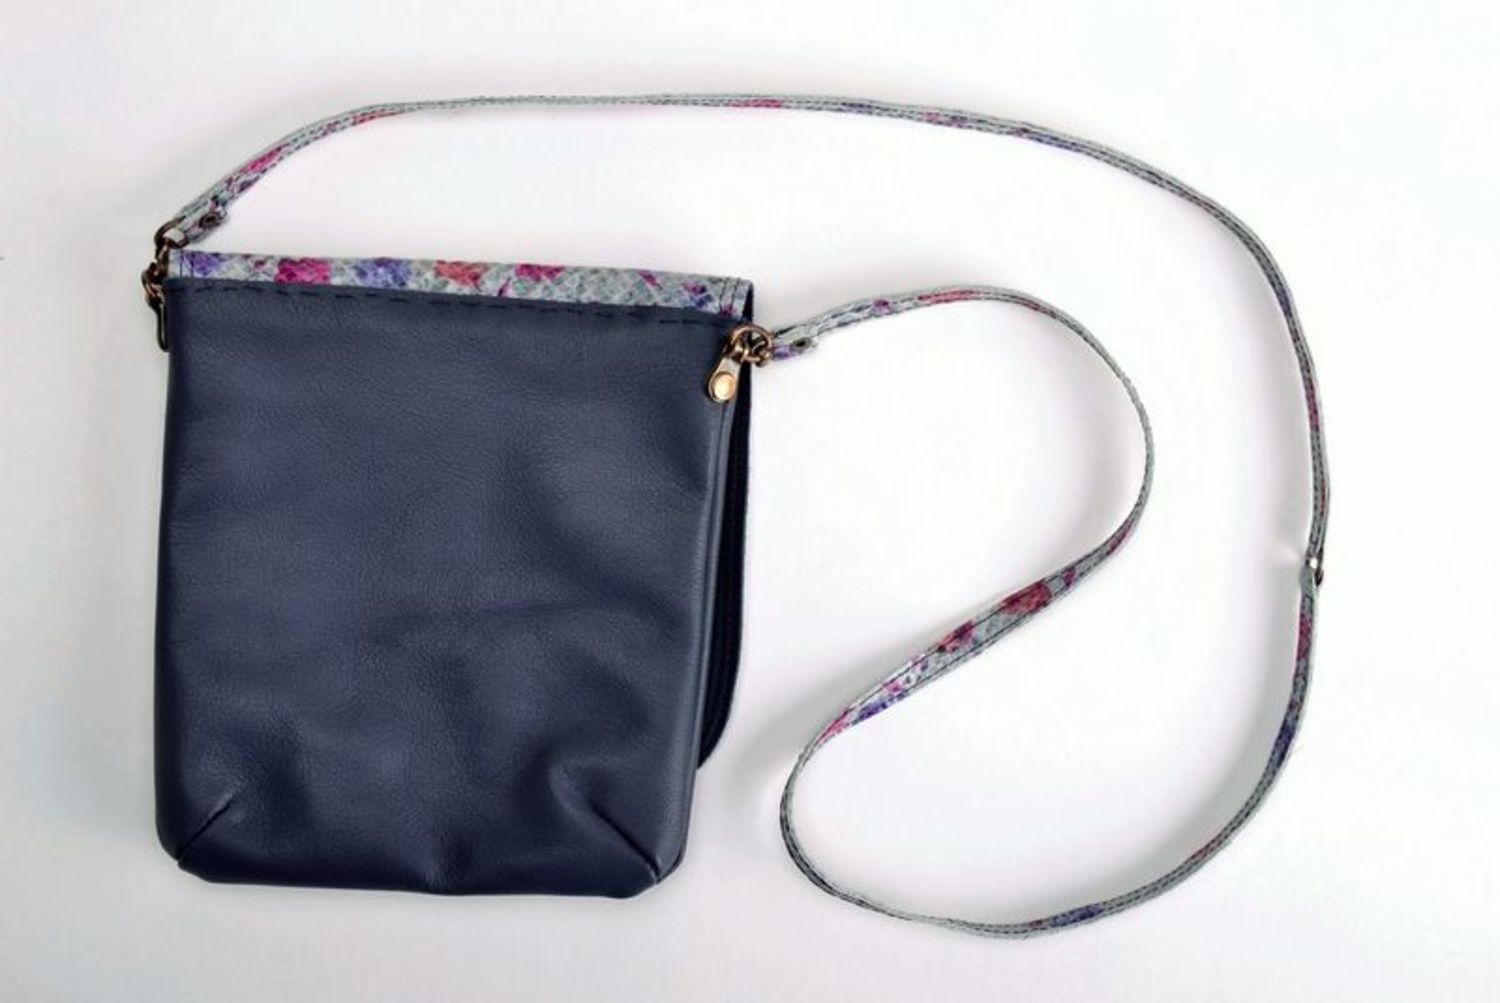 Leather shoulder bag with floral print photo 5